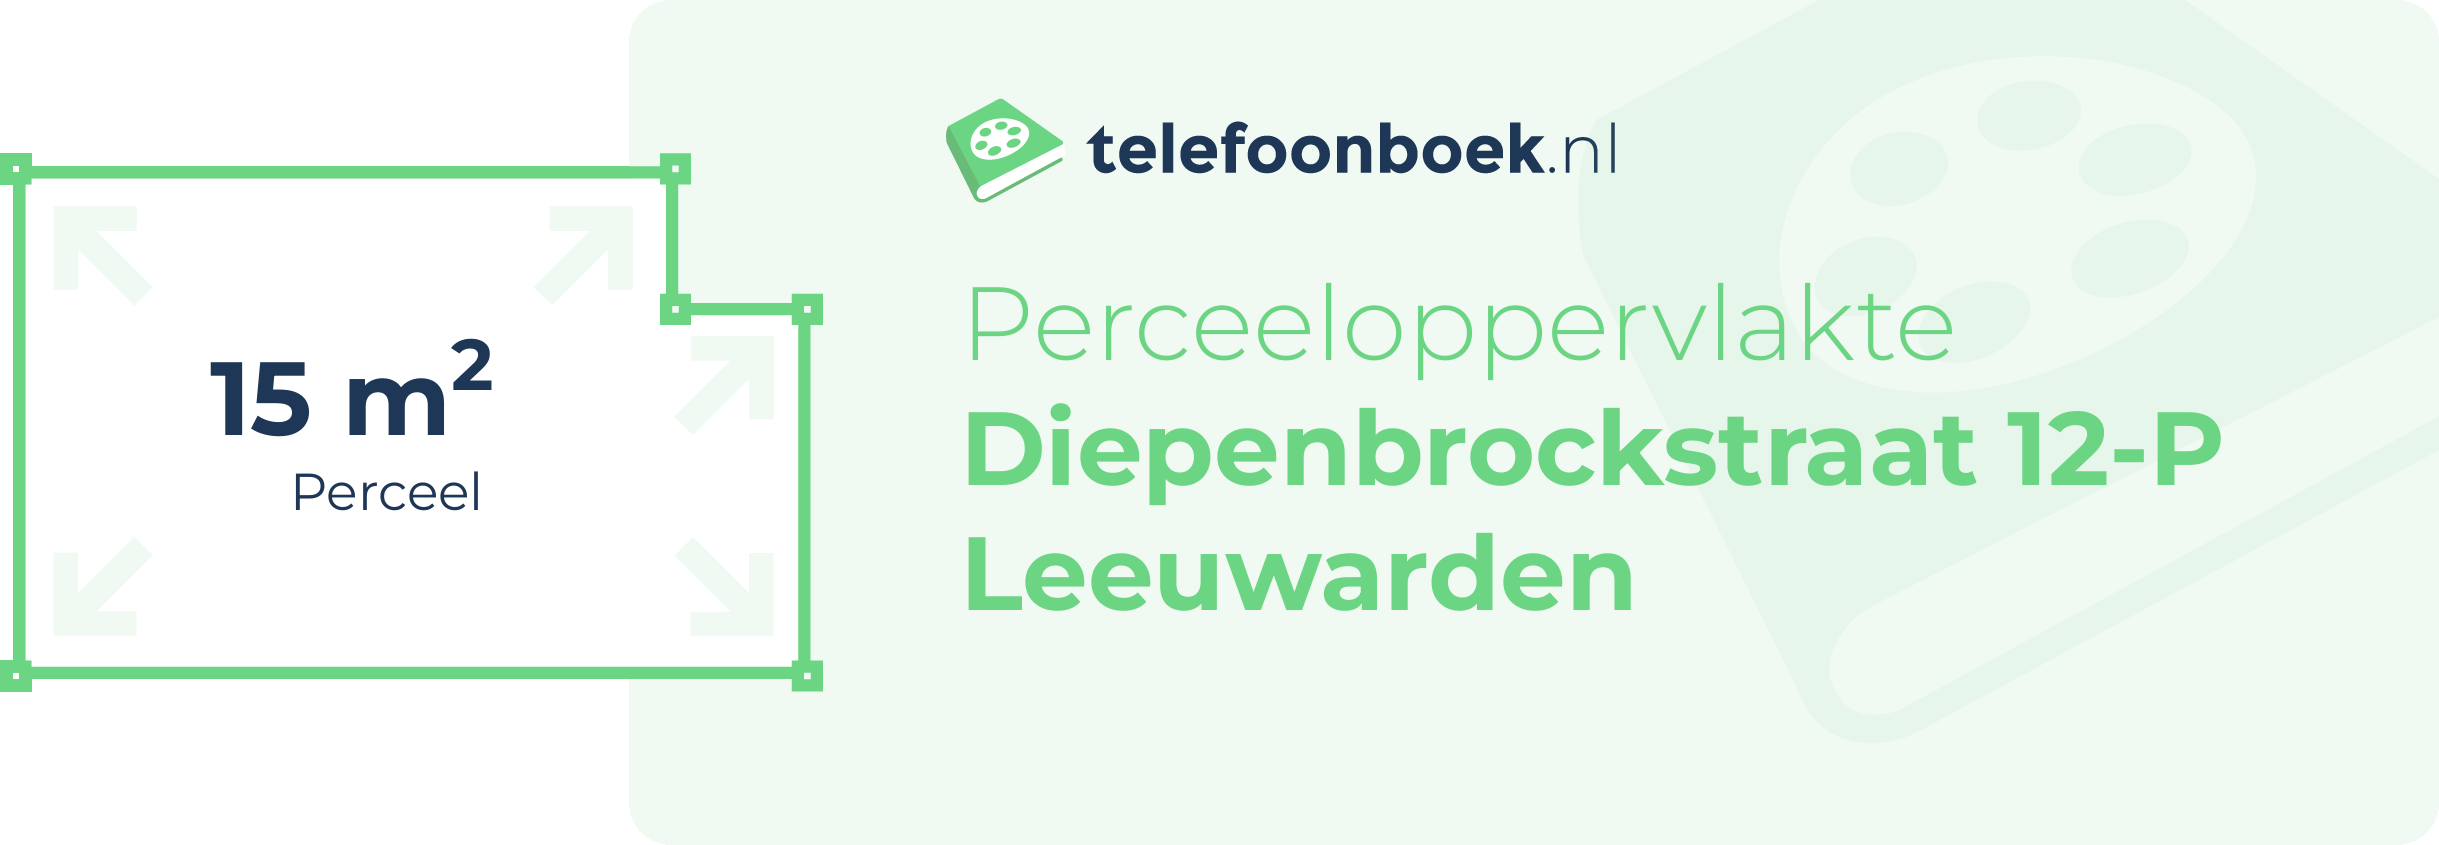 Perceeloppervlakte Diepenbrockstraat 12-P Leeuwarden